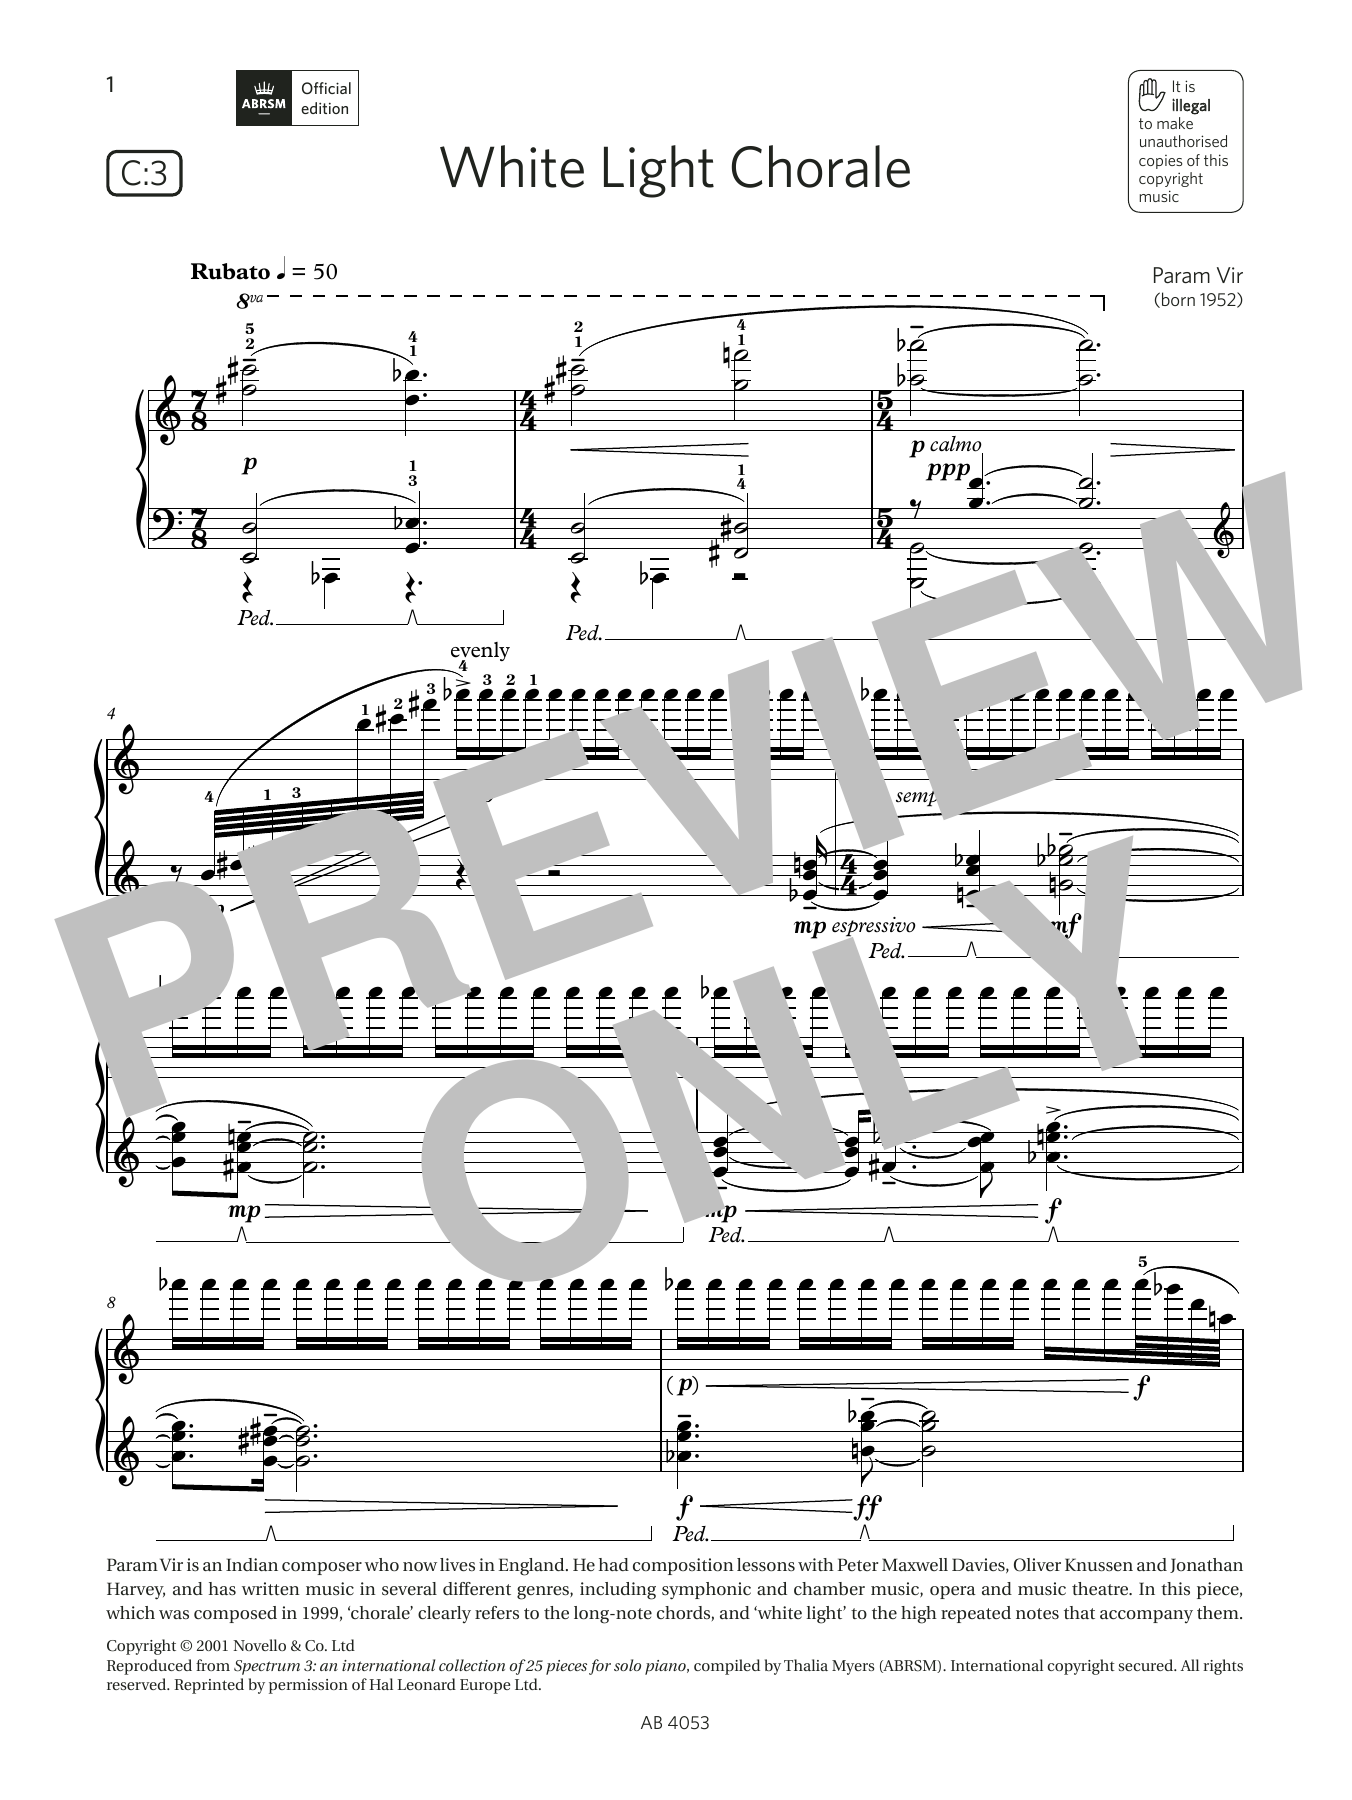 Download Param Vir White Light Chorale (Grade 7, list C3, Sheet Music